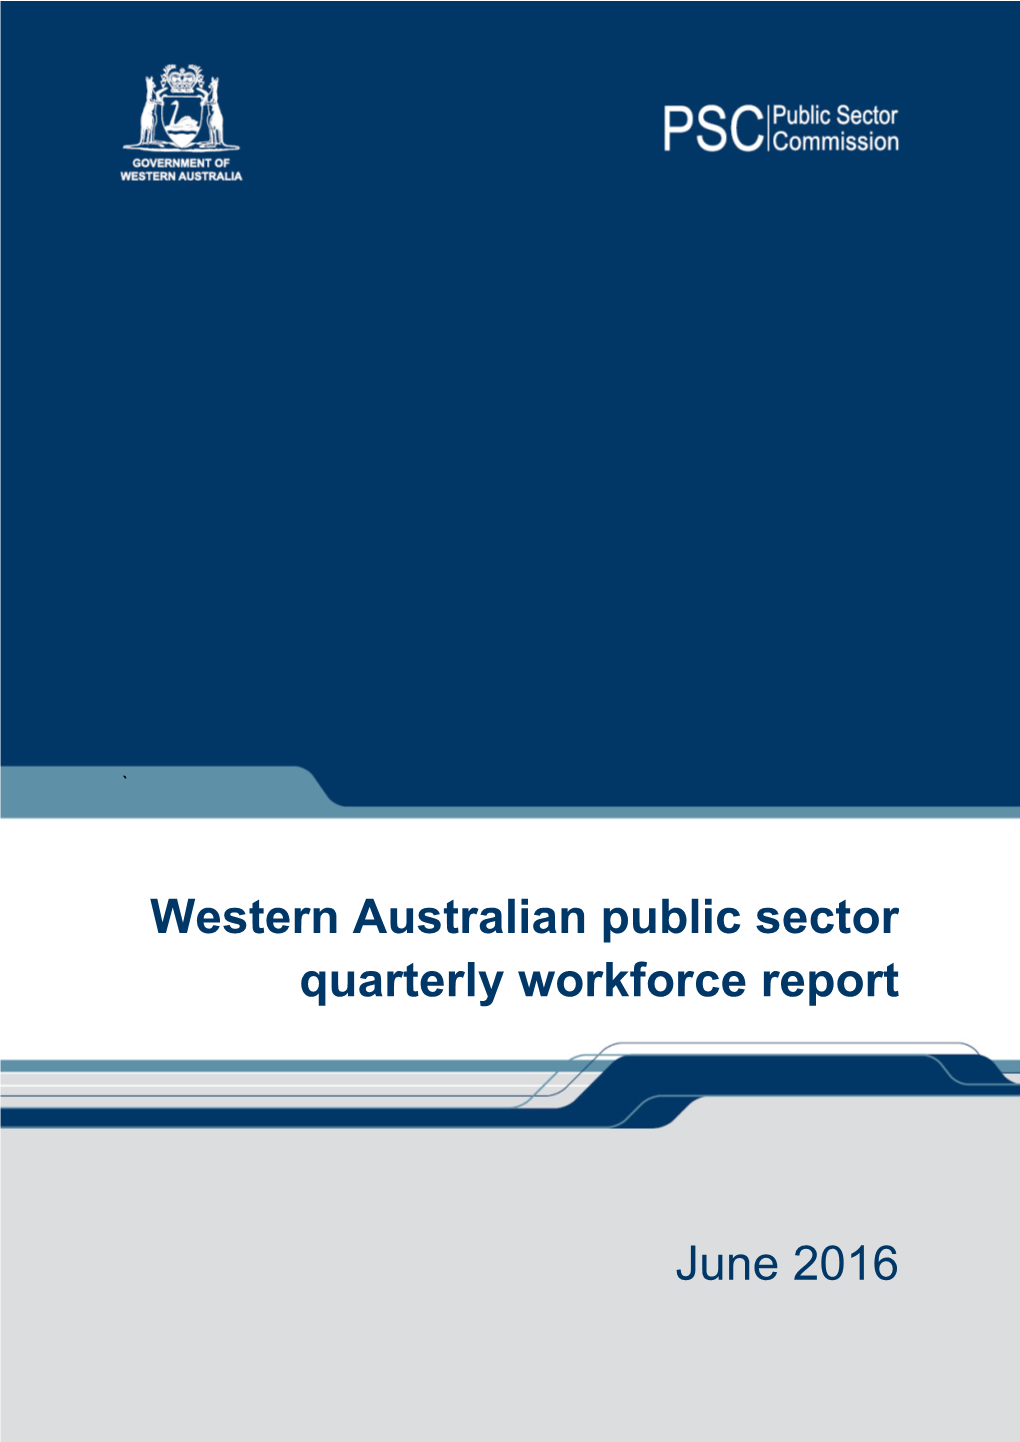 Western Australian Public Sector Quarterly Workforce Report June 2016